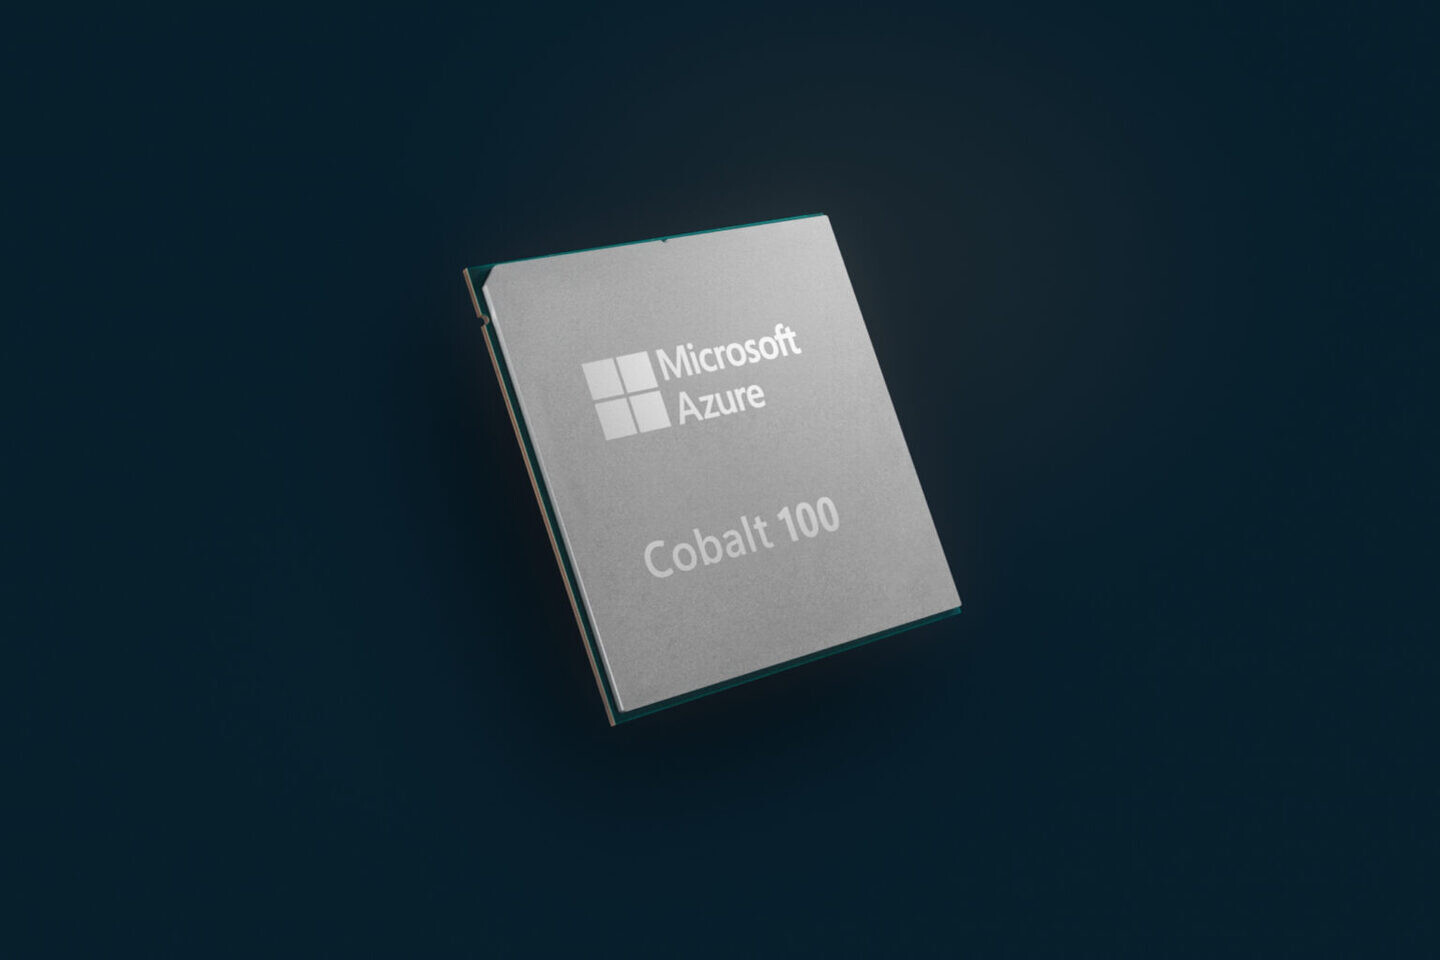 Microsoft chip